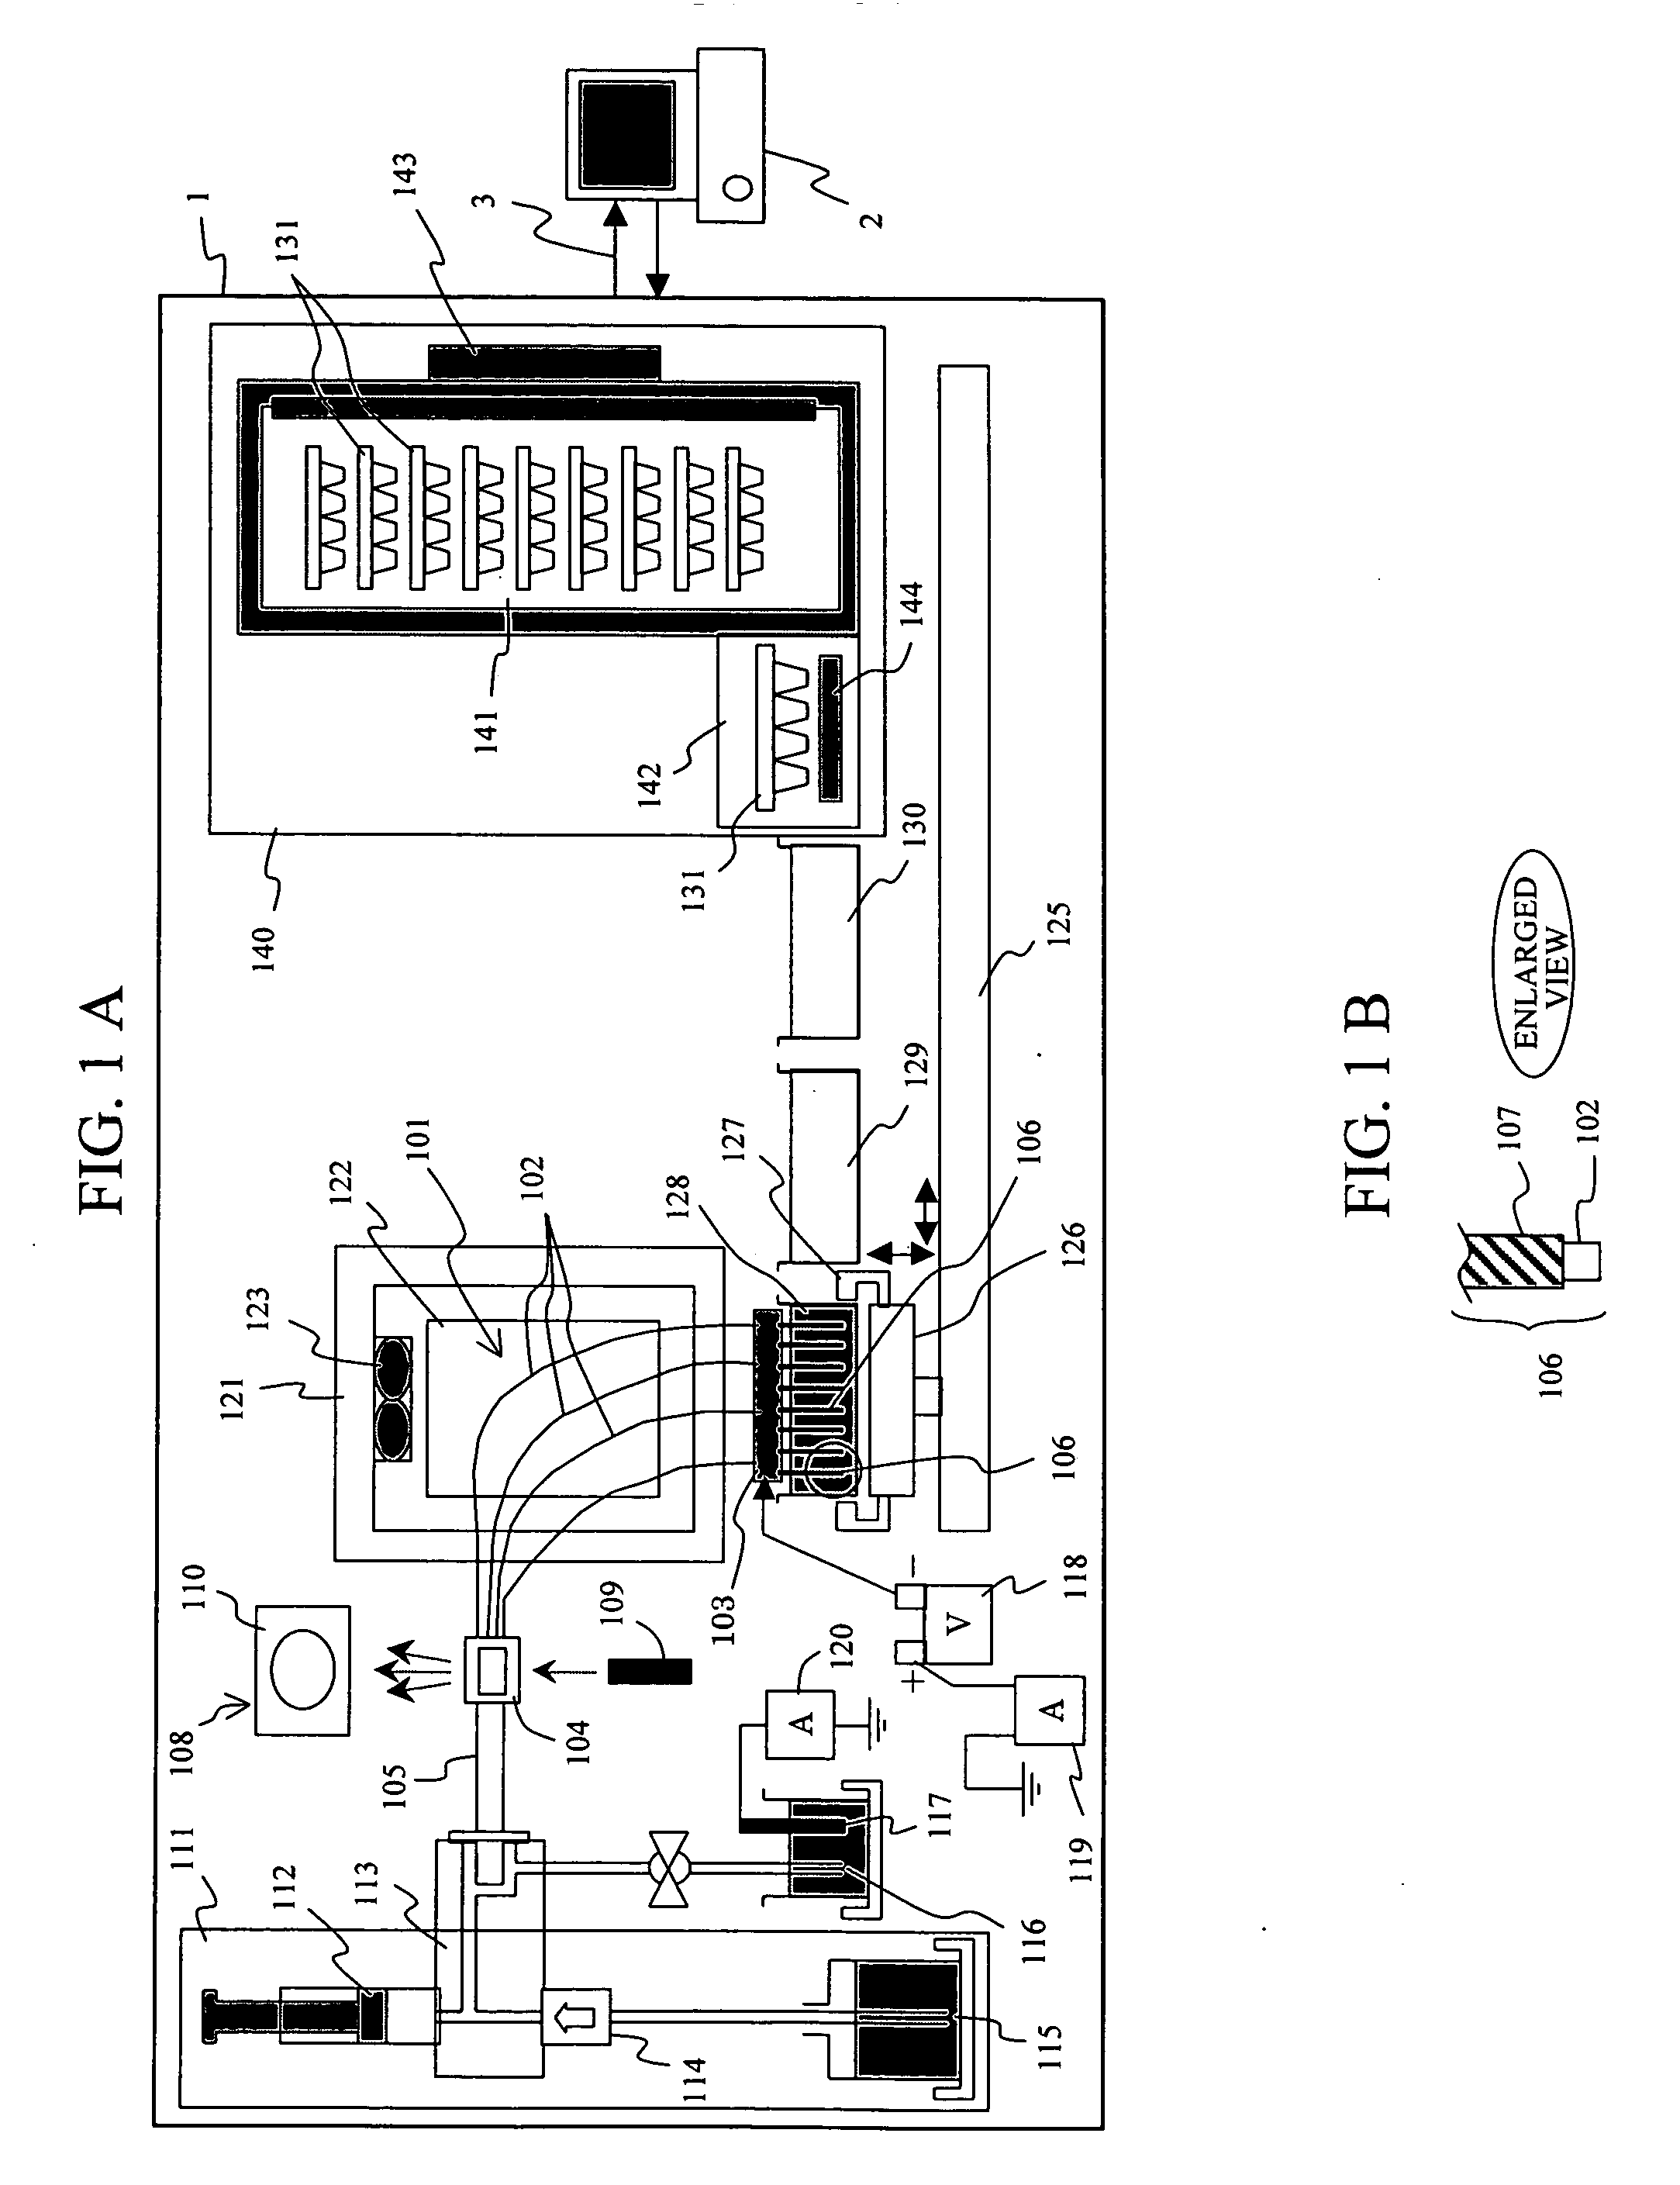 Electrophoresis apparatus, and method of analysis